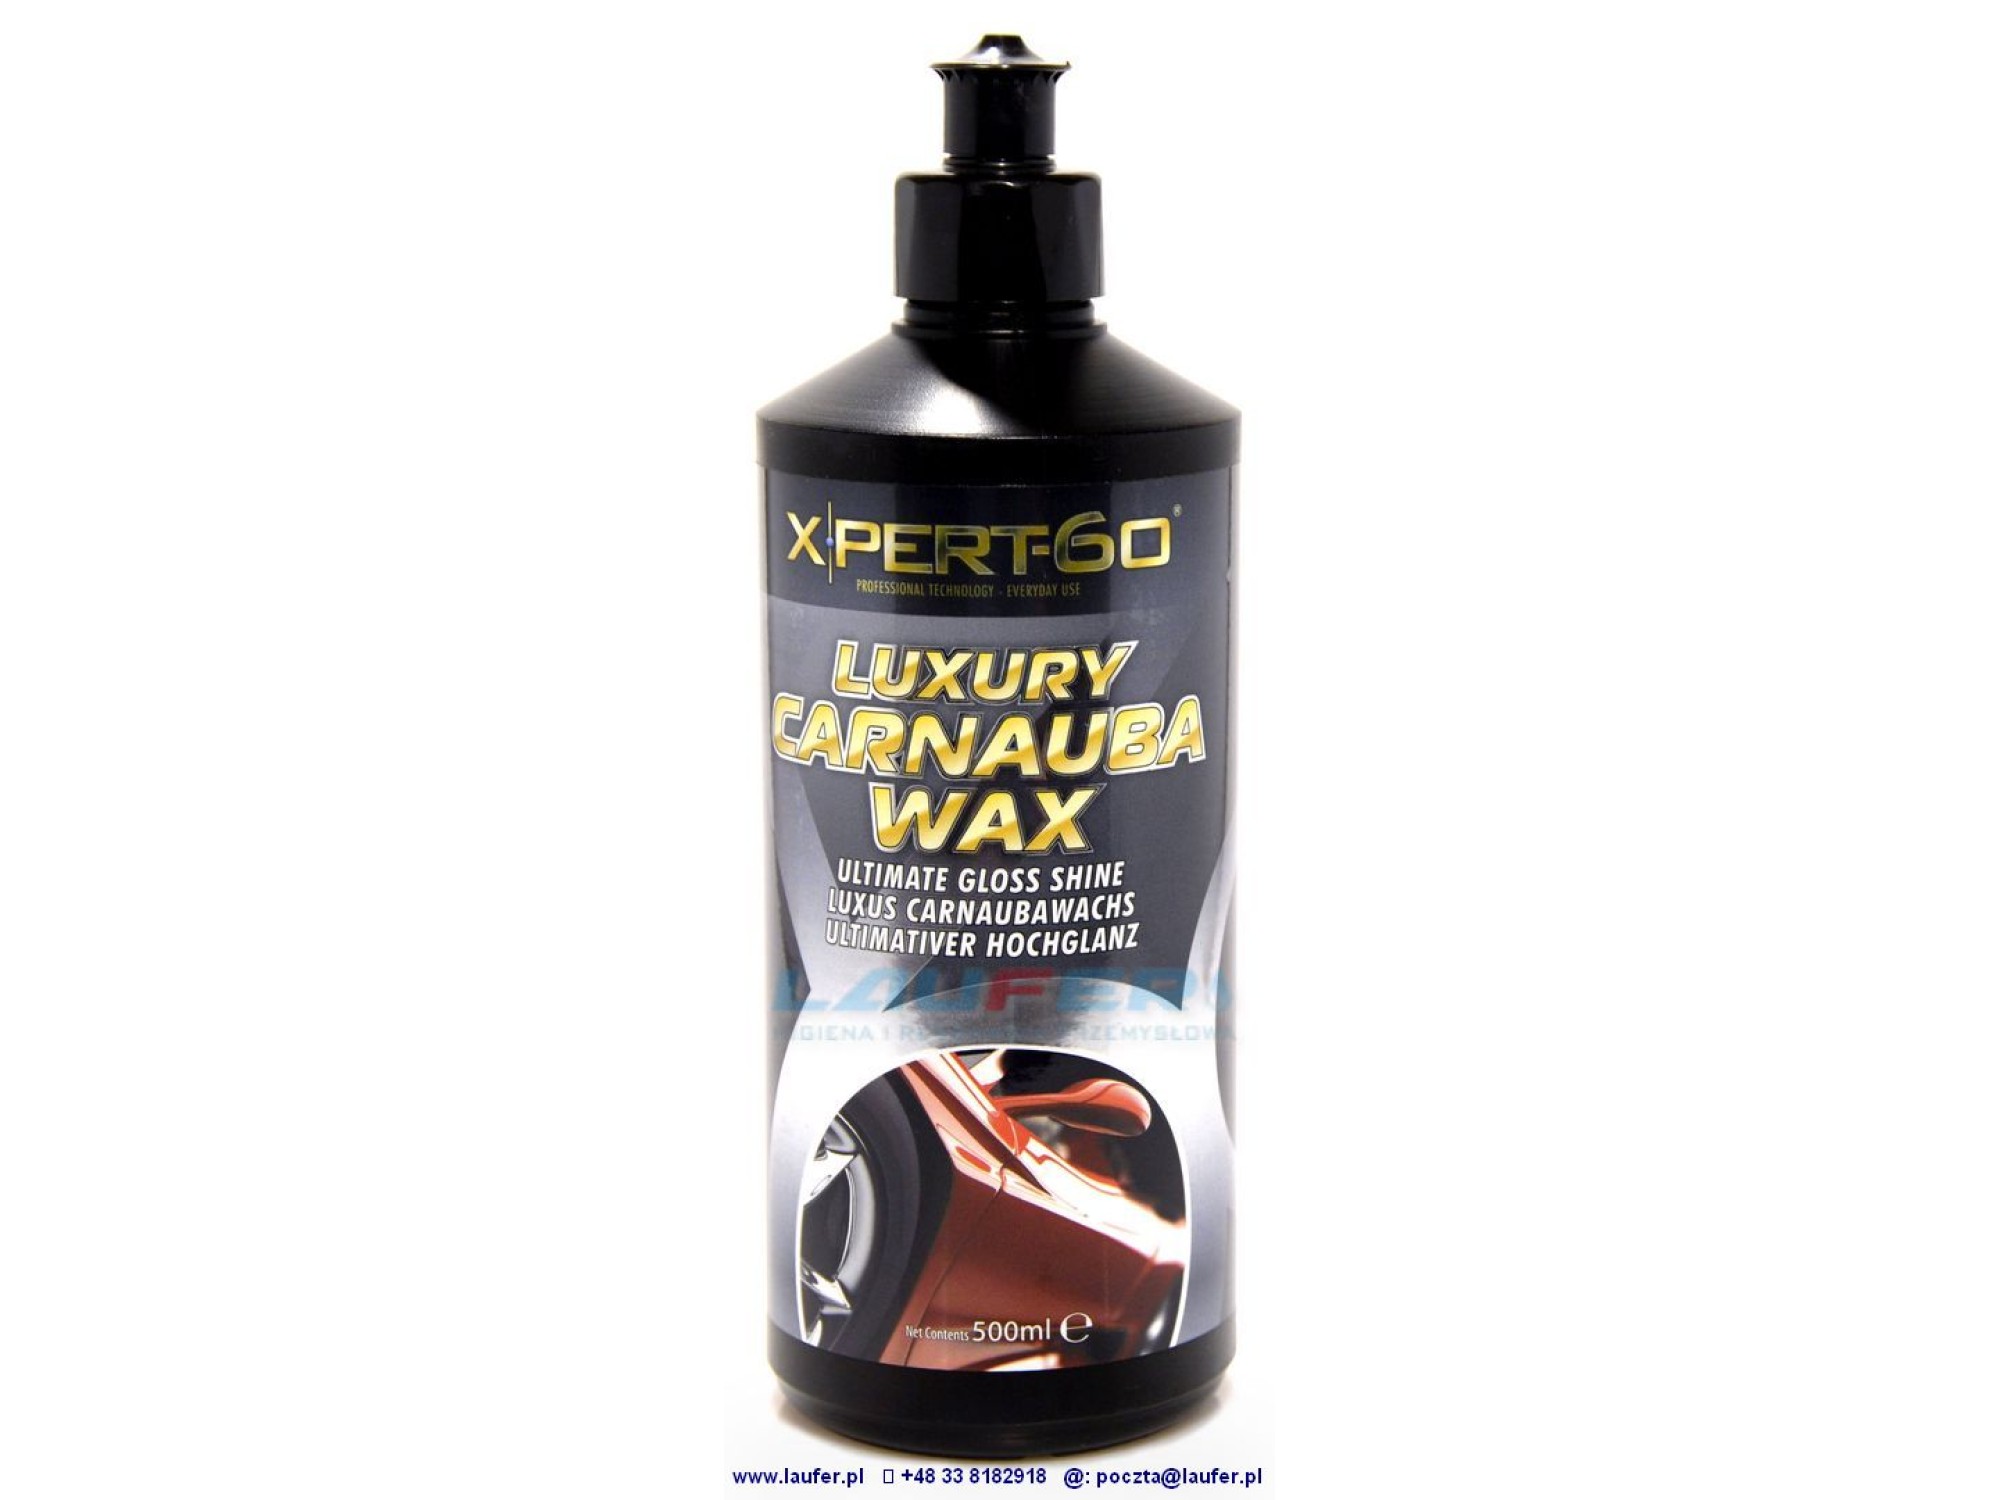 Luxury Carnauba Wax wosk carnauba